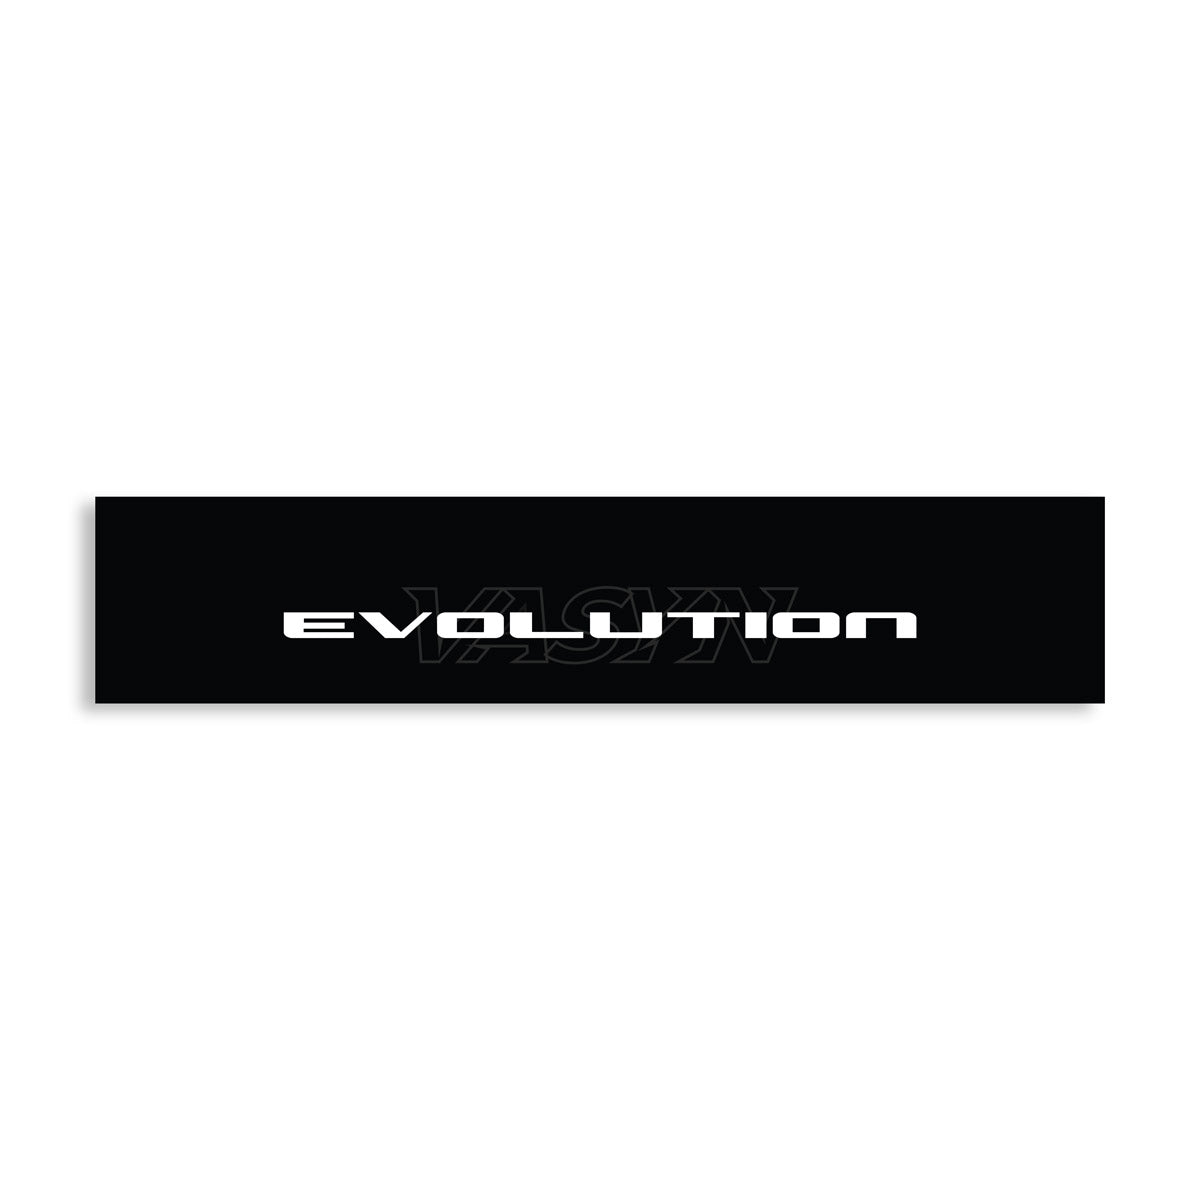 Vasyn x Evolution Windshield Banner - Black